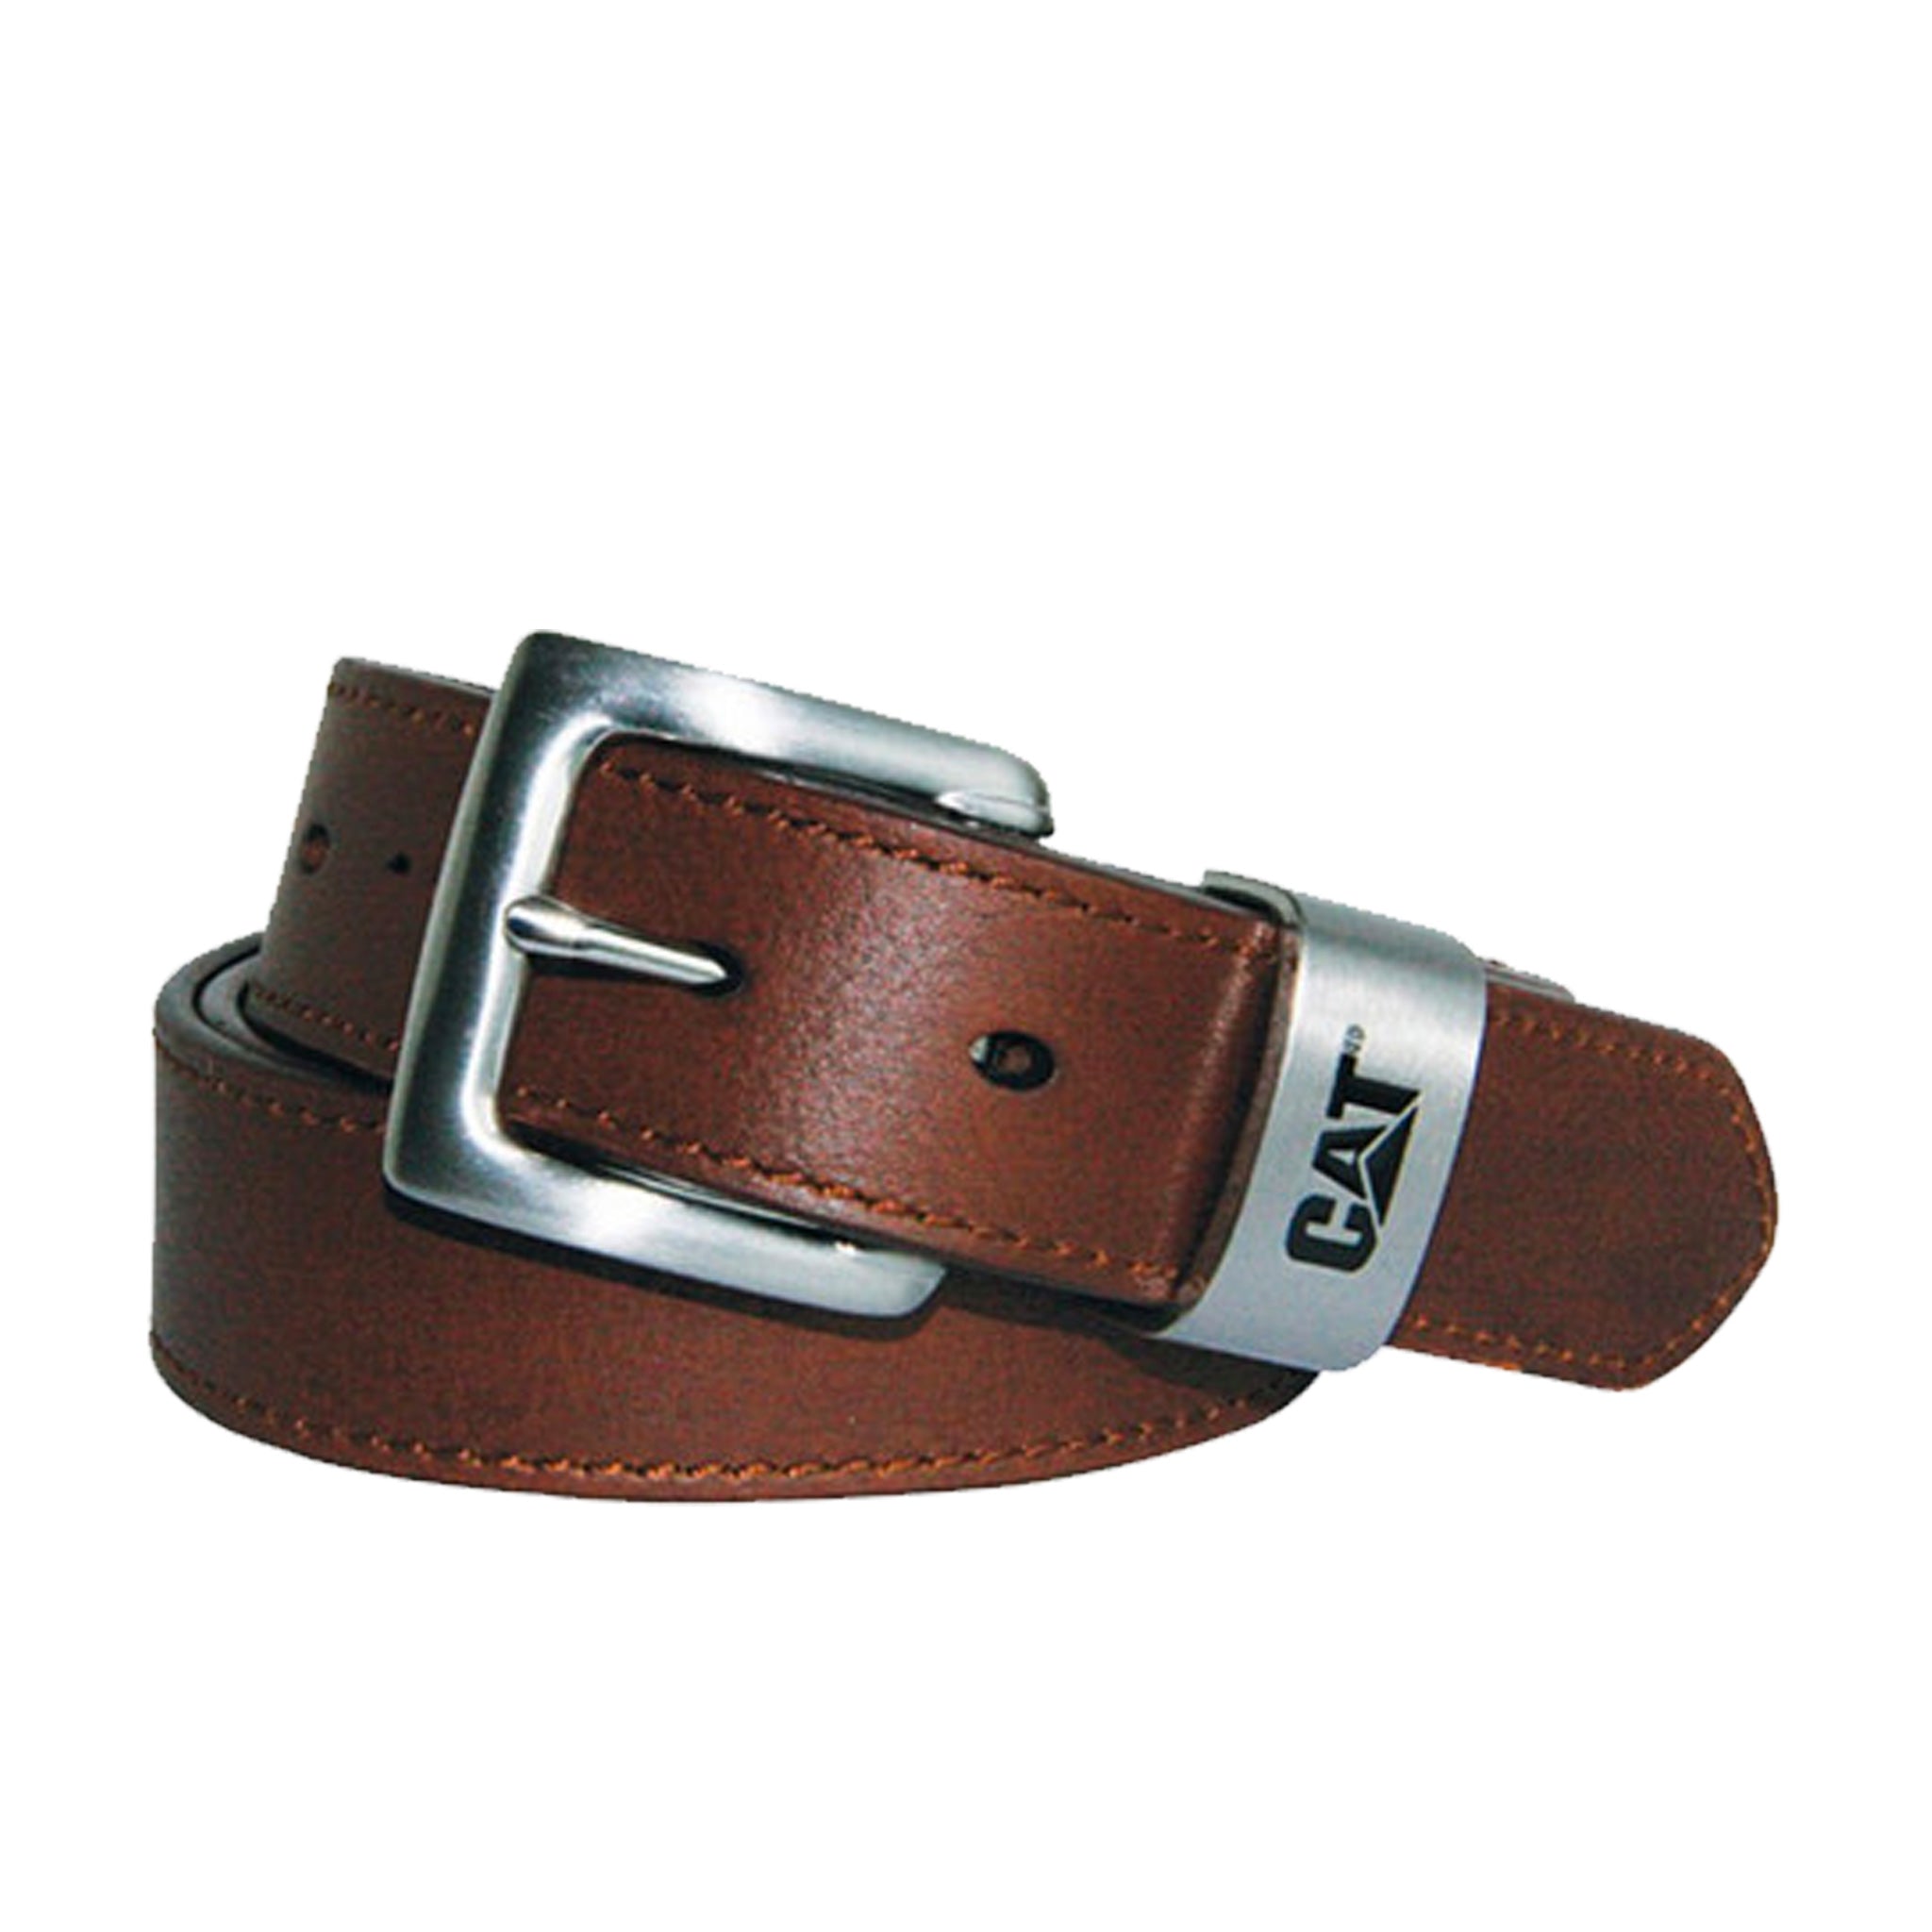 cat workwear calderwood leather belt in brown